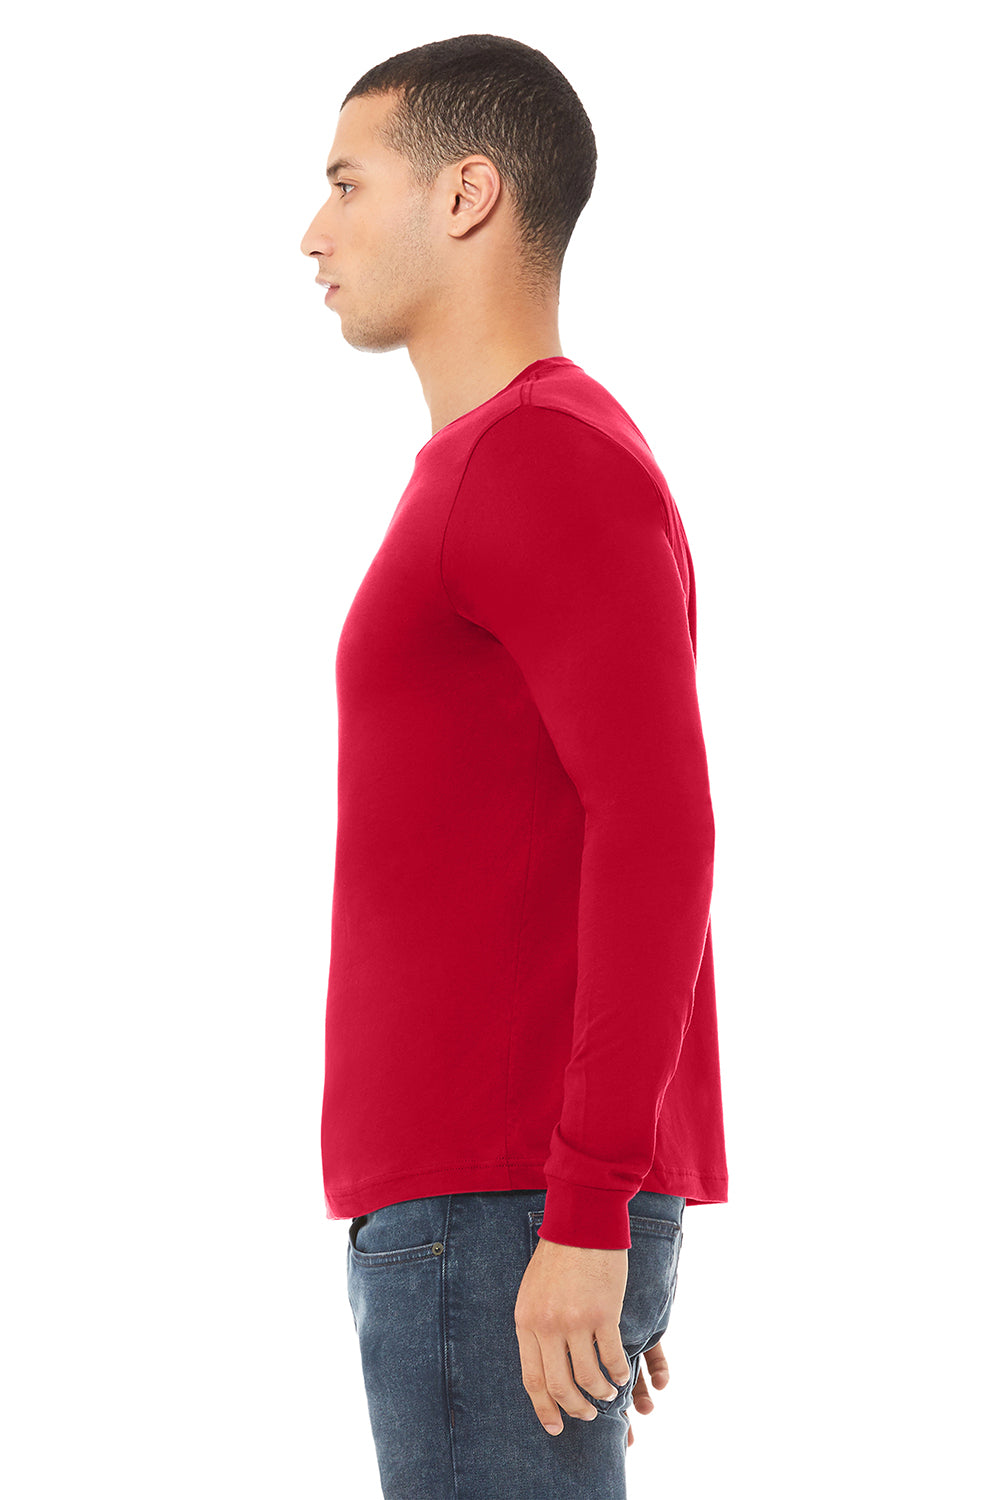 Bella + Canvas BC3501/3501 Mens Jersey Long Sleeve Crewneck T-Shirt Red Model Side